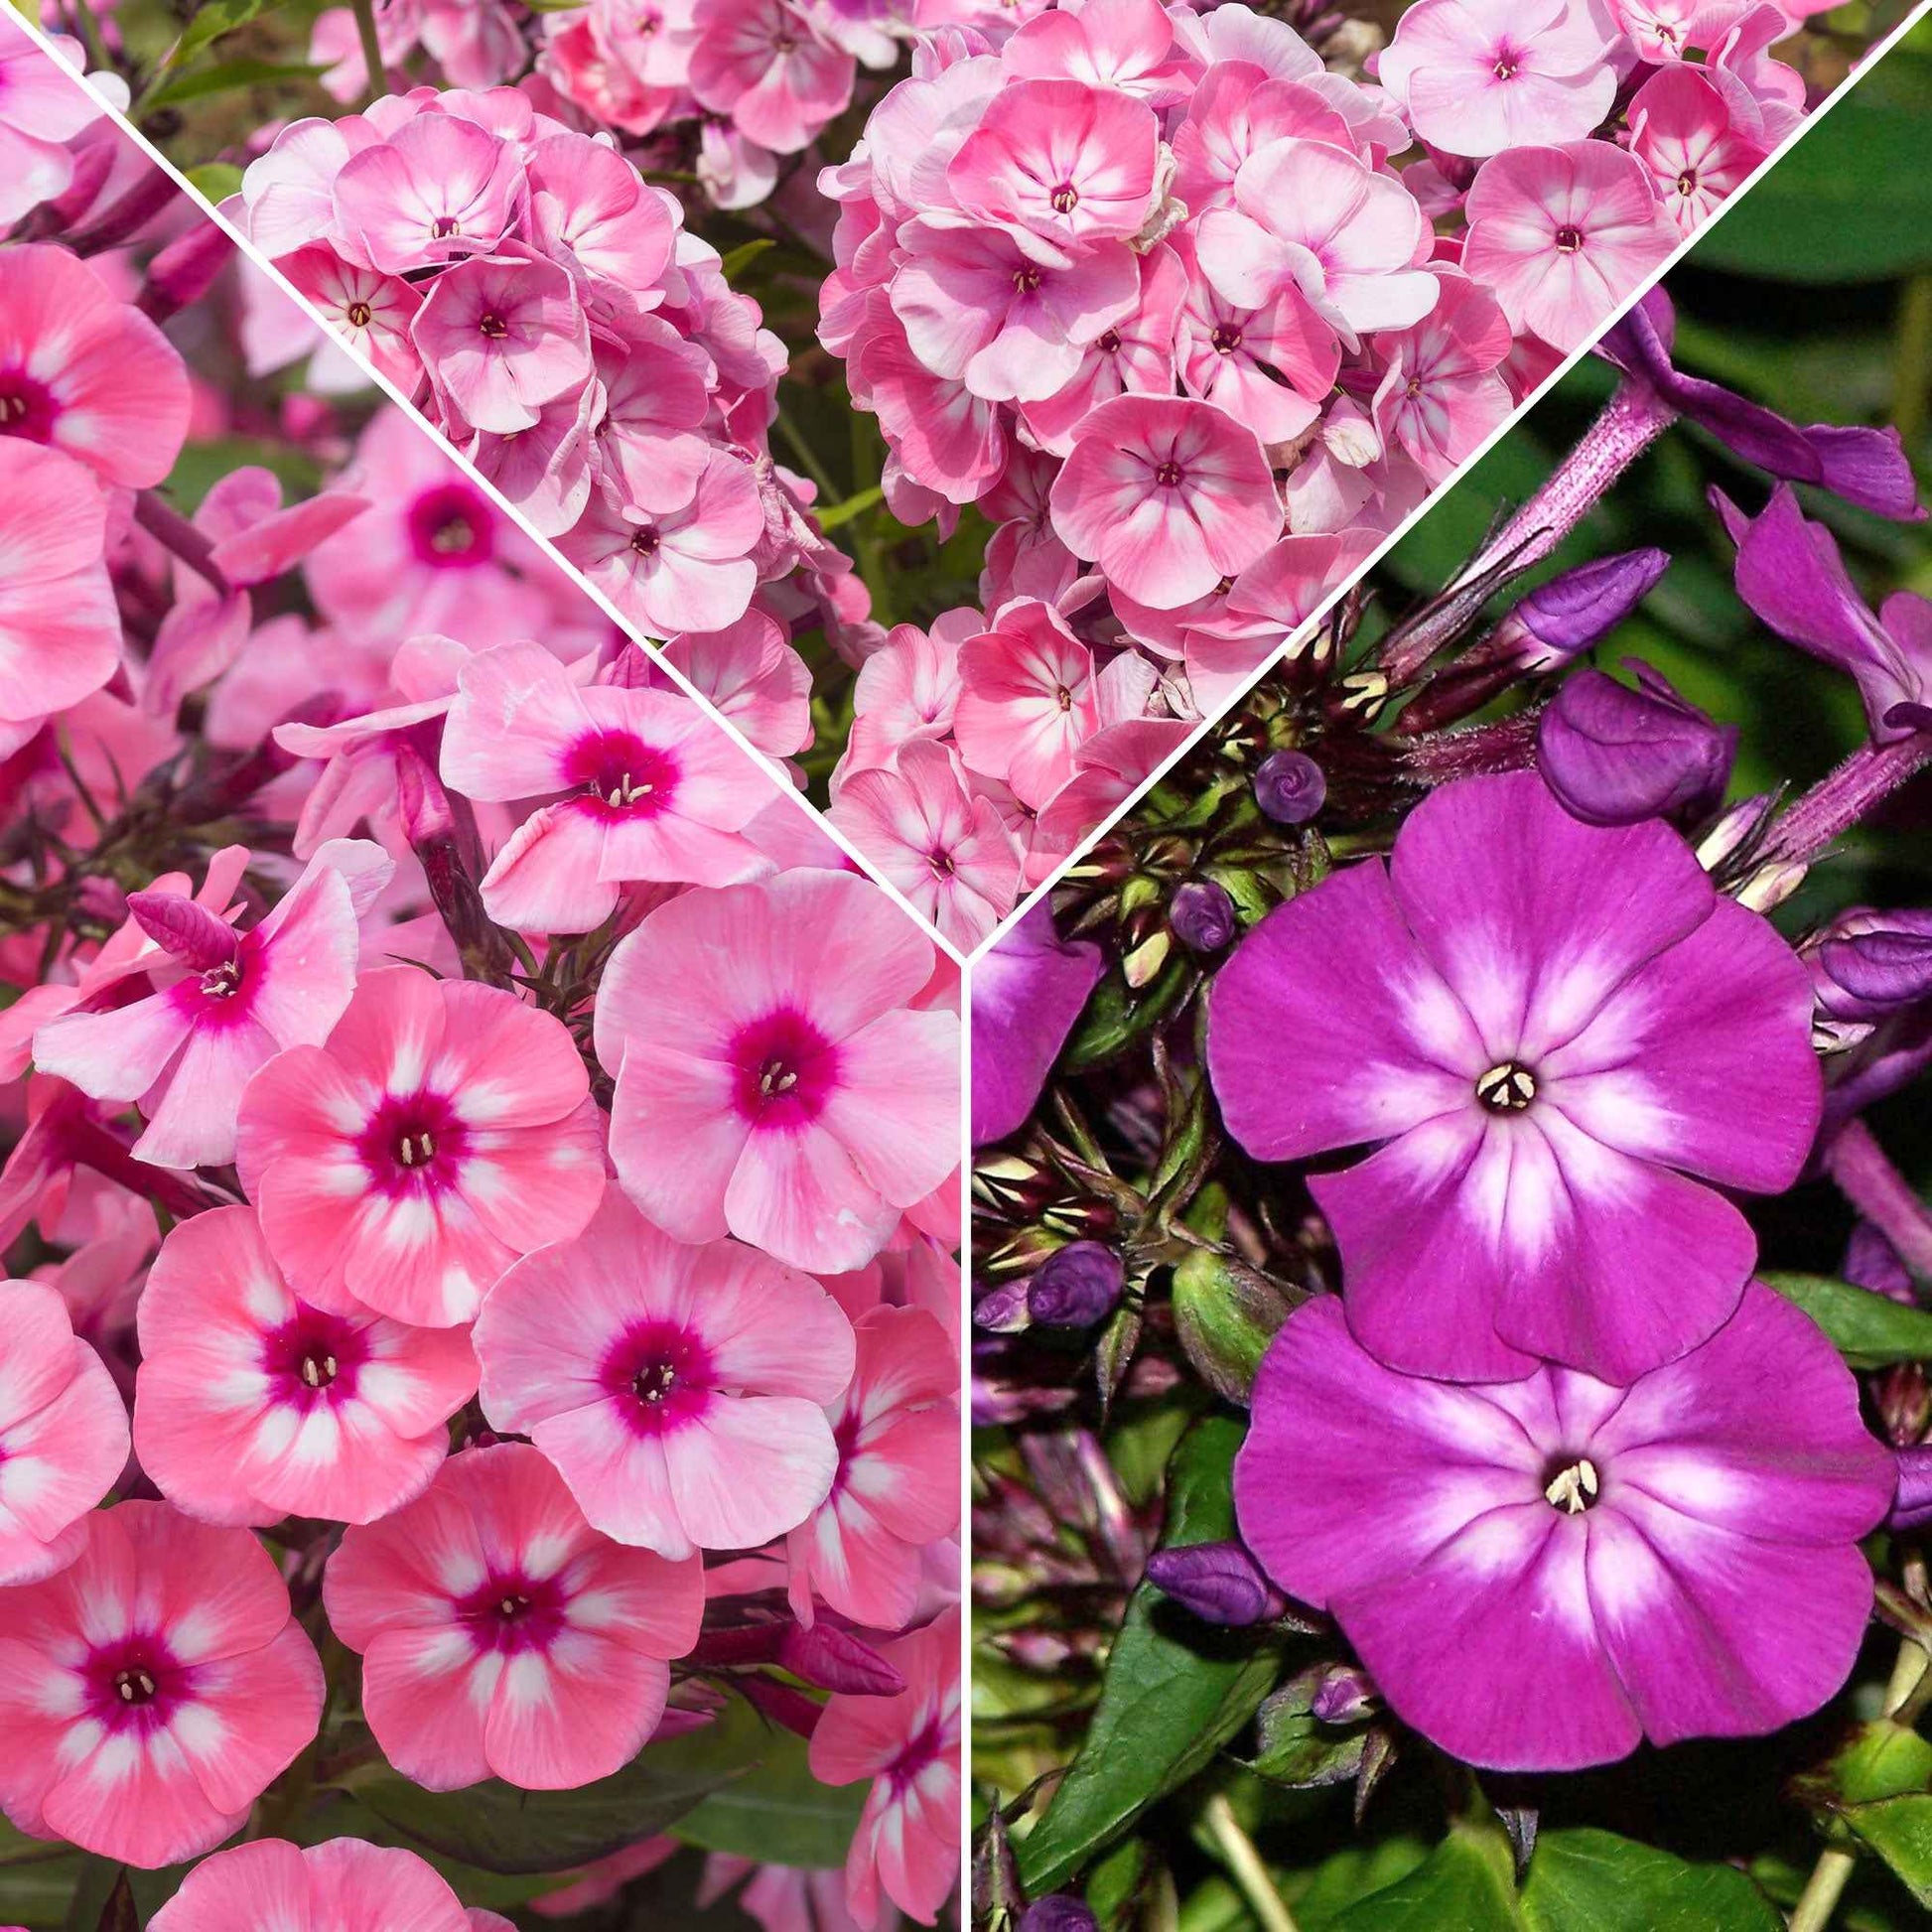 3x Vlambloem Phlox - Mix roze-paars-wit - Bare rooted - Winterhard - Tuinplanten